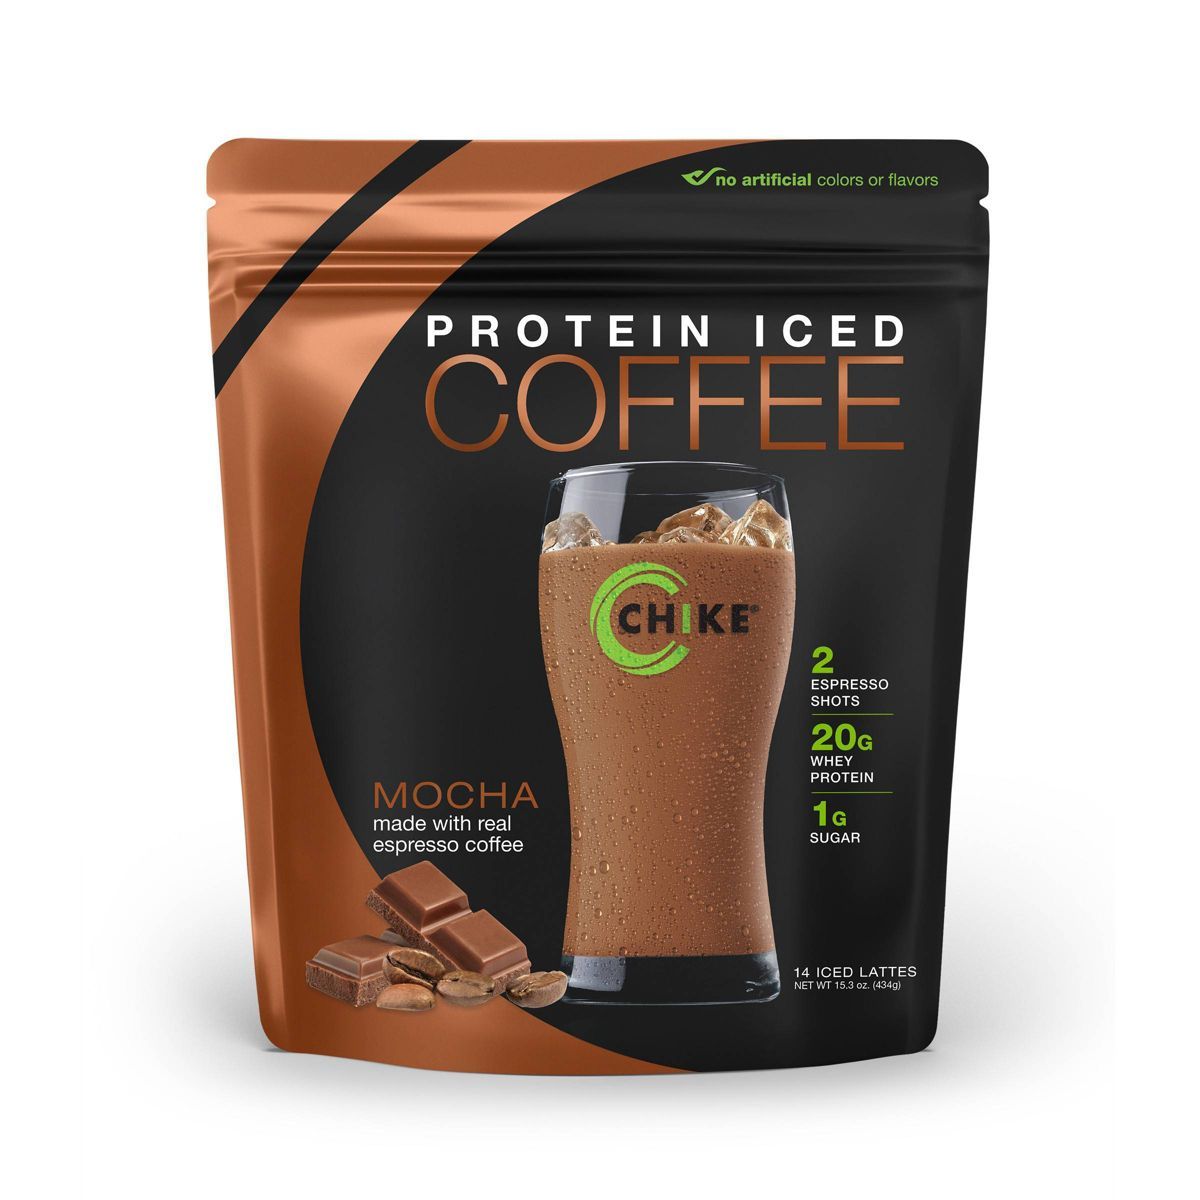 Chike Protein Iced Coffee Bag - Mocha - 15.3oz | Target